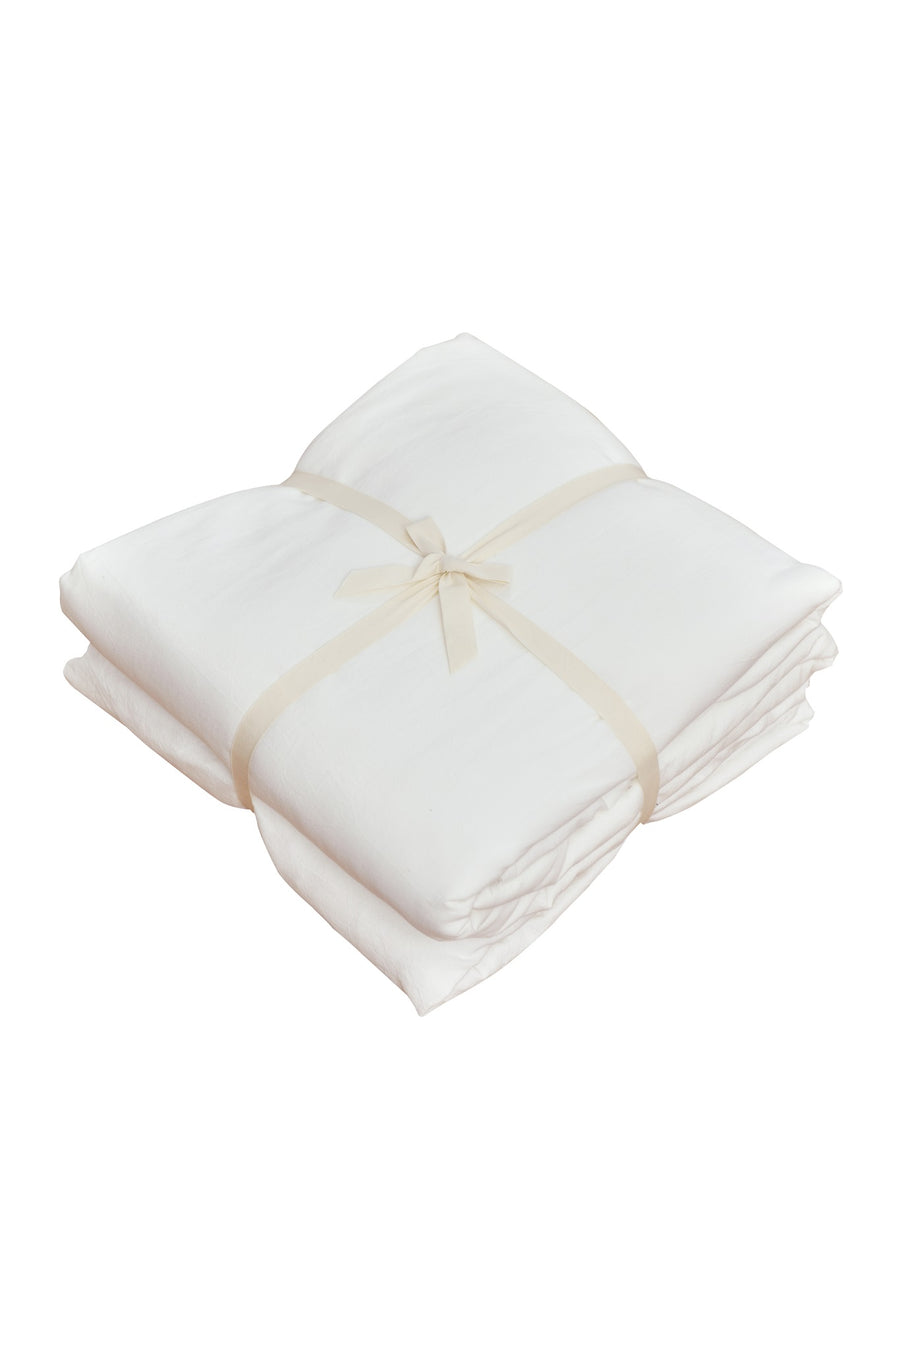 Mael Q 5-pc Quilt Cover Set (White)